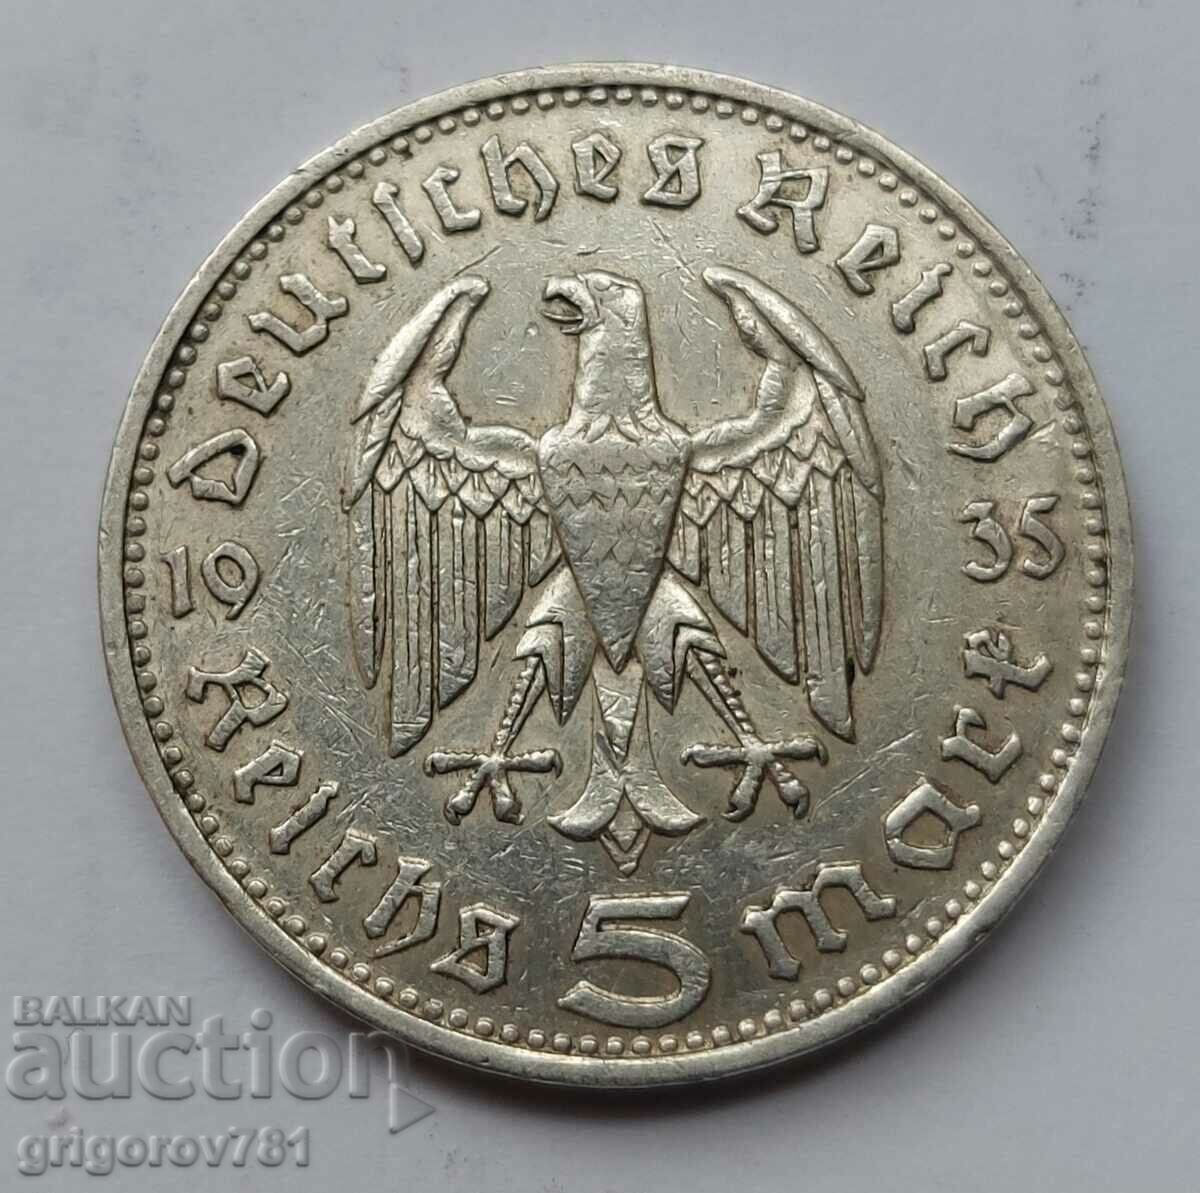 5 Mark Silver Γερμανία 1935 D III Reich Ασημένιο νόμισμα #89